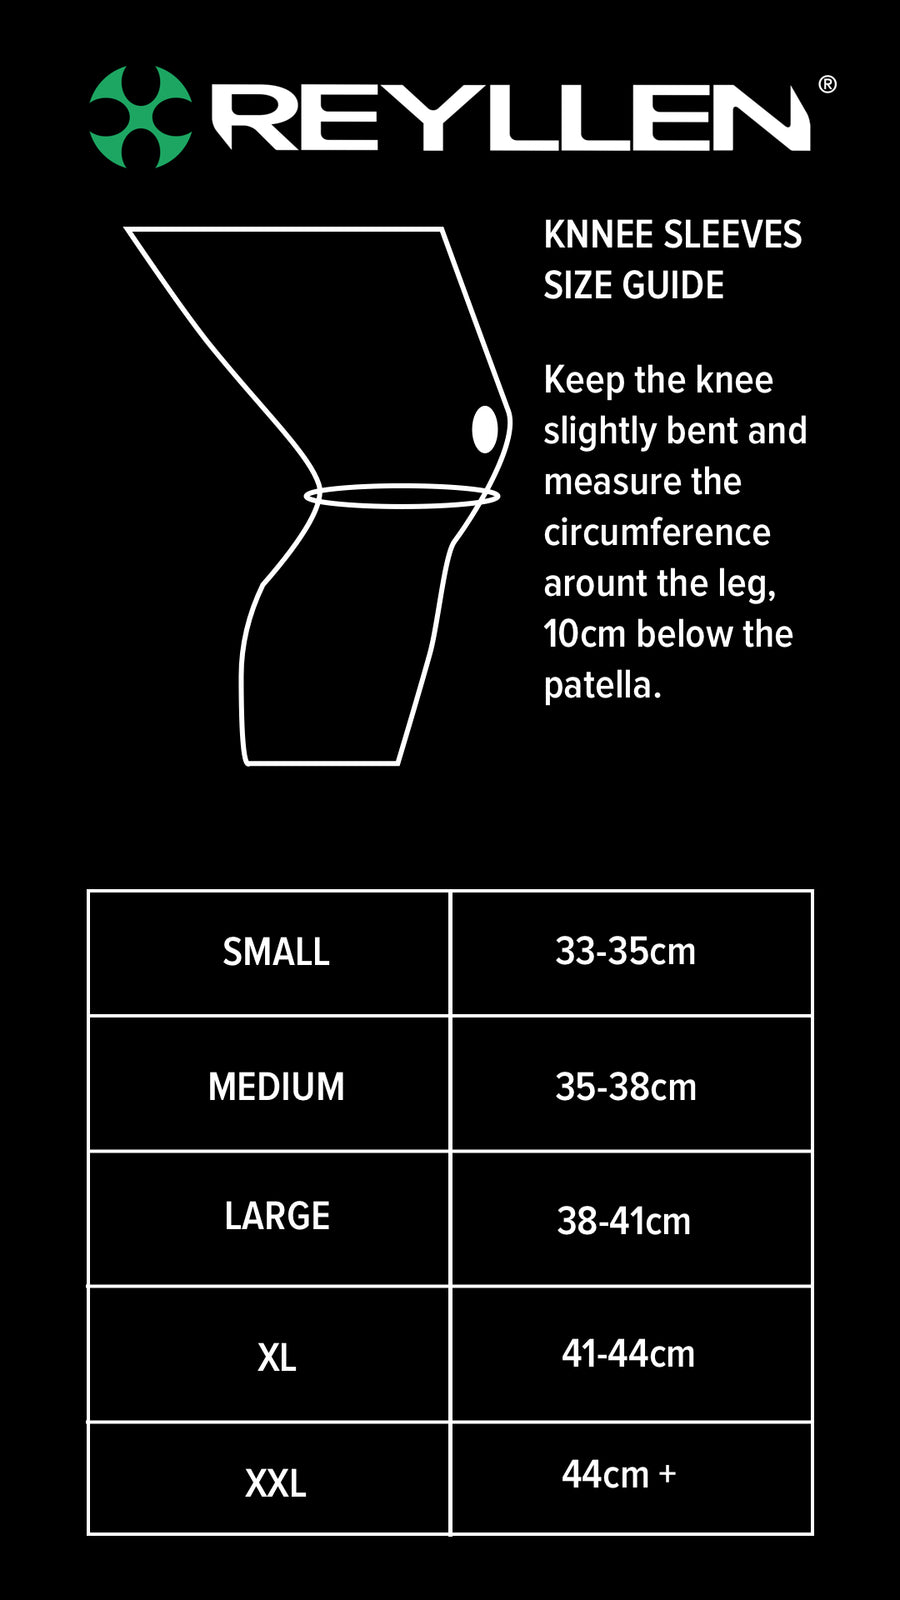 Reyllen Venta X2 7mm Knee Sleeves Neoprene black support size guide